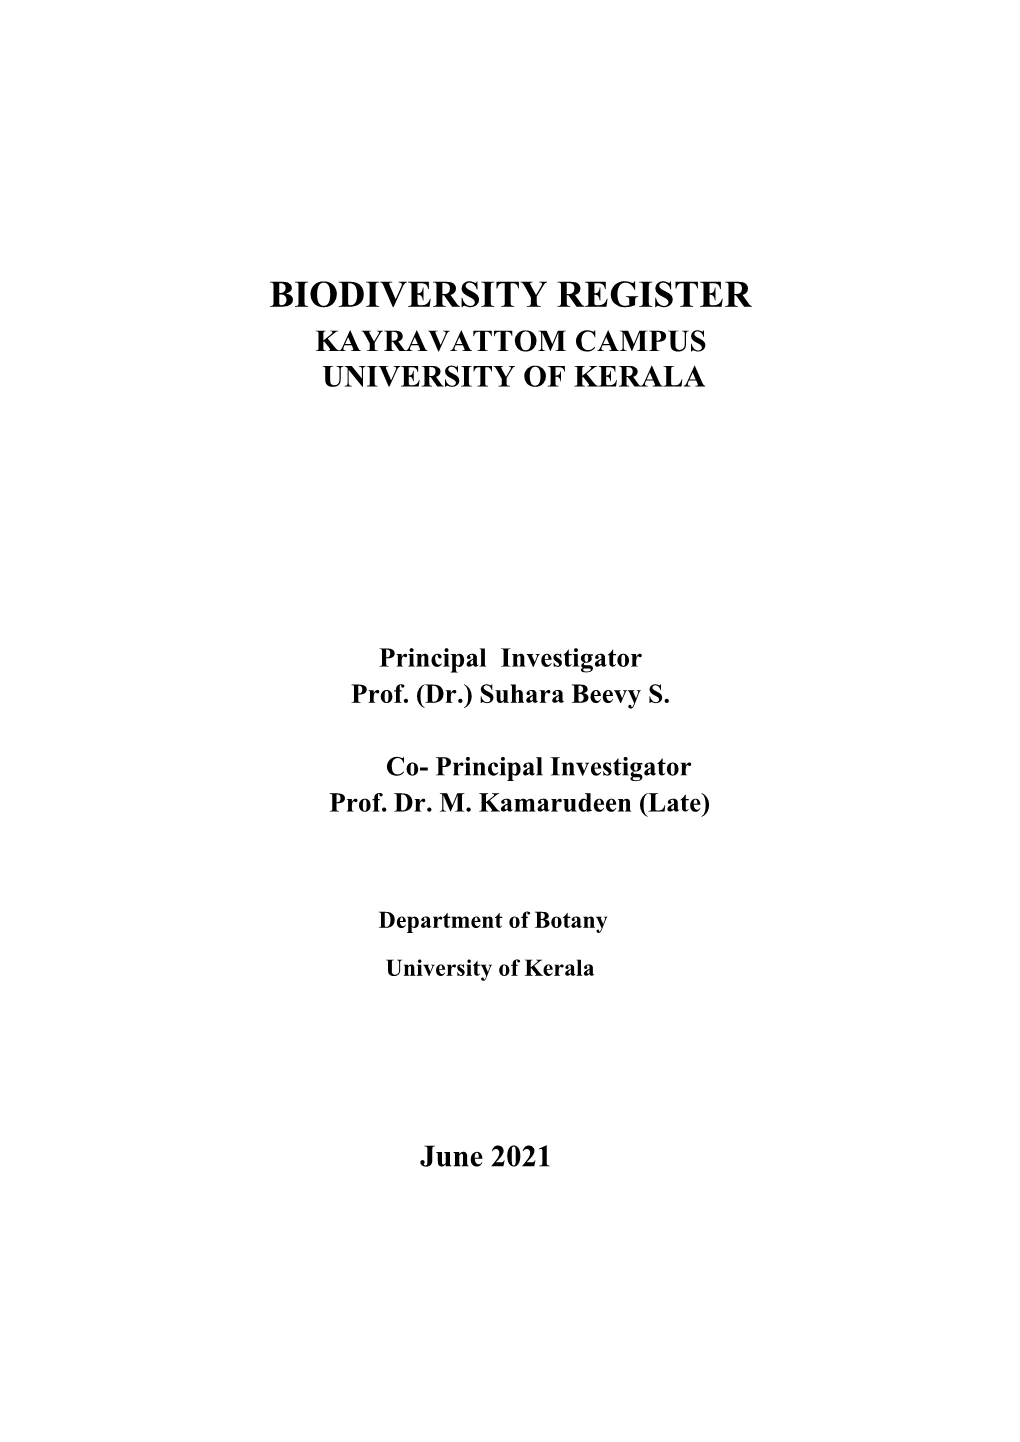 Biodiversity Register Kayravattom Campus University of Kerala